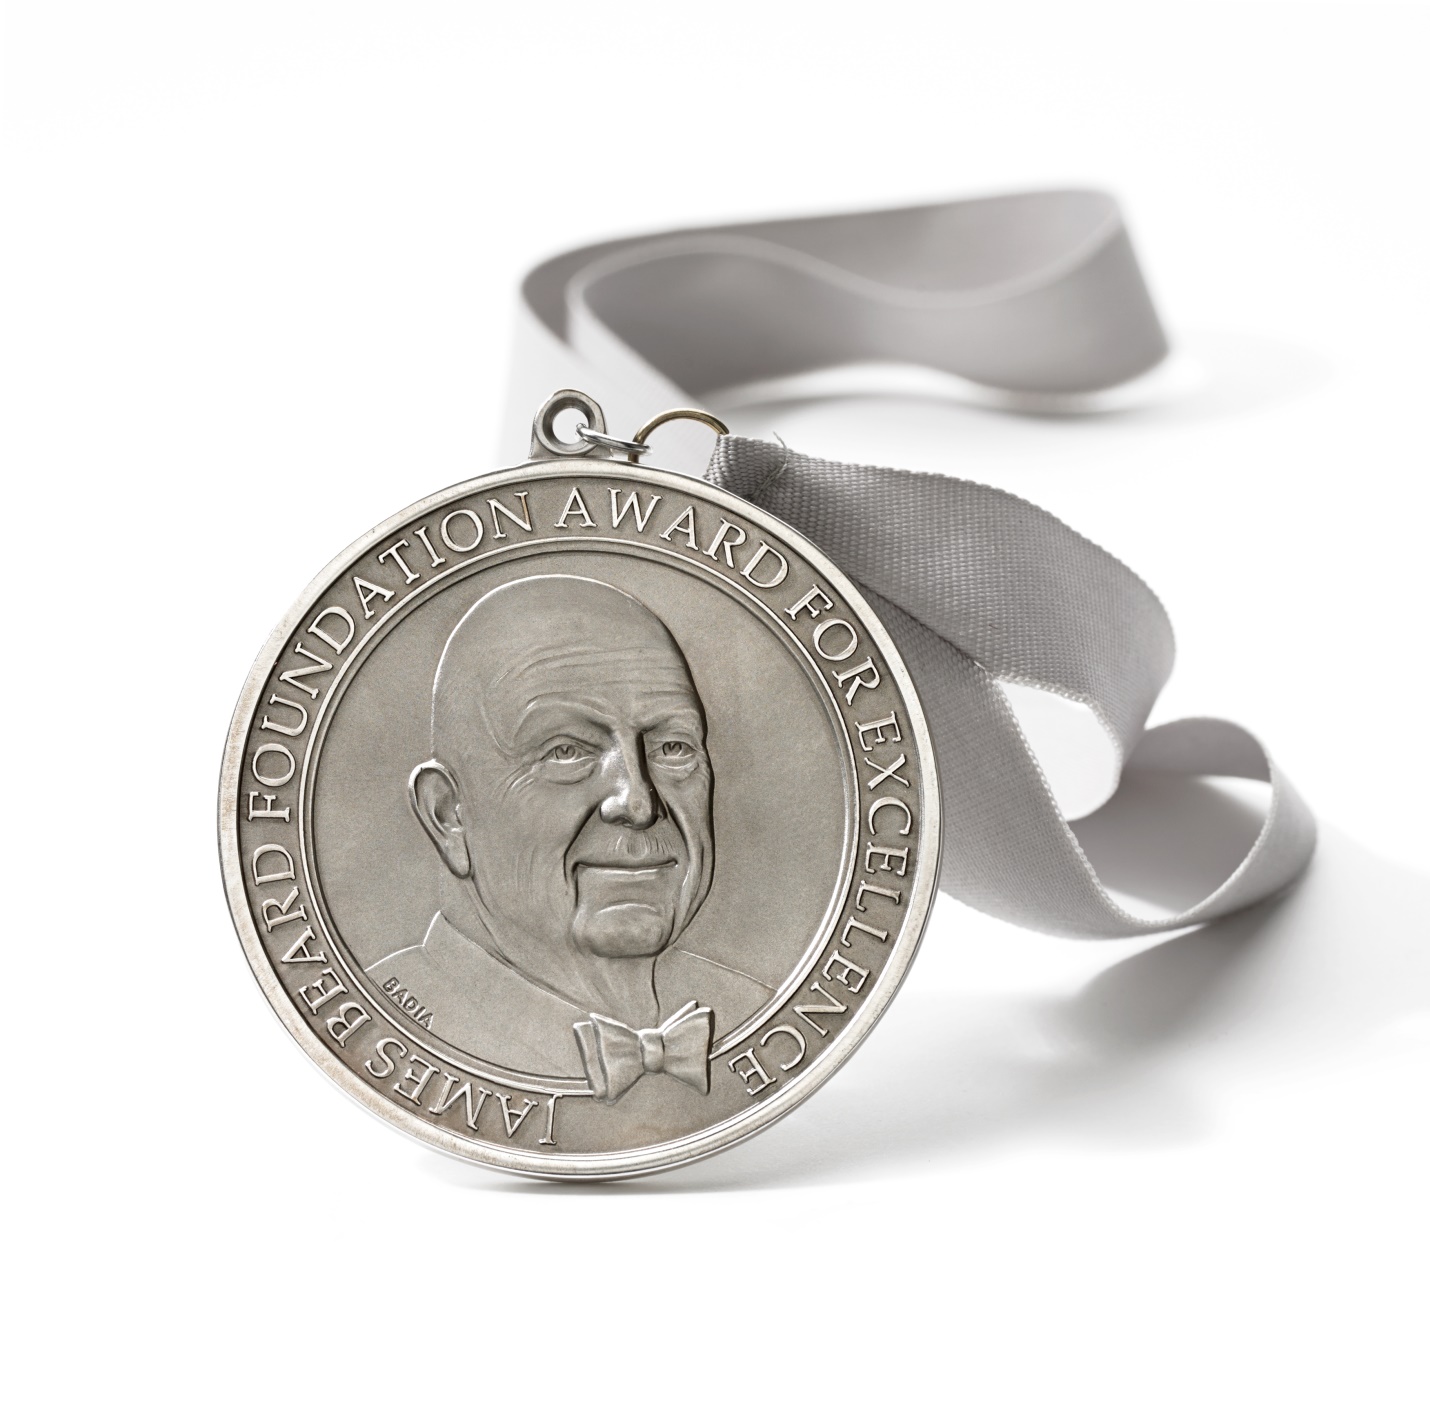 James Beard Medal